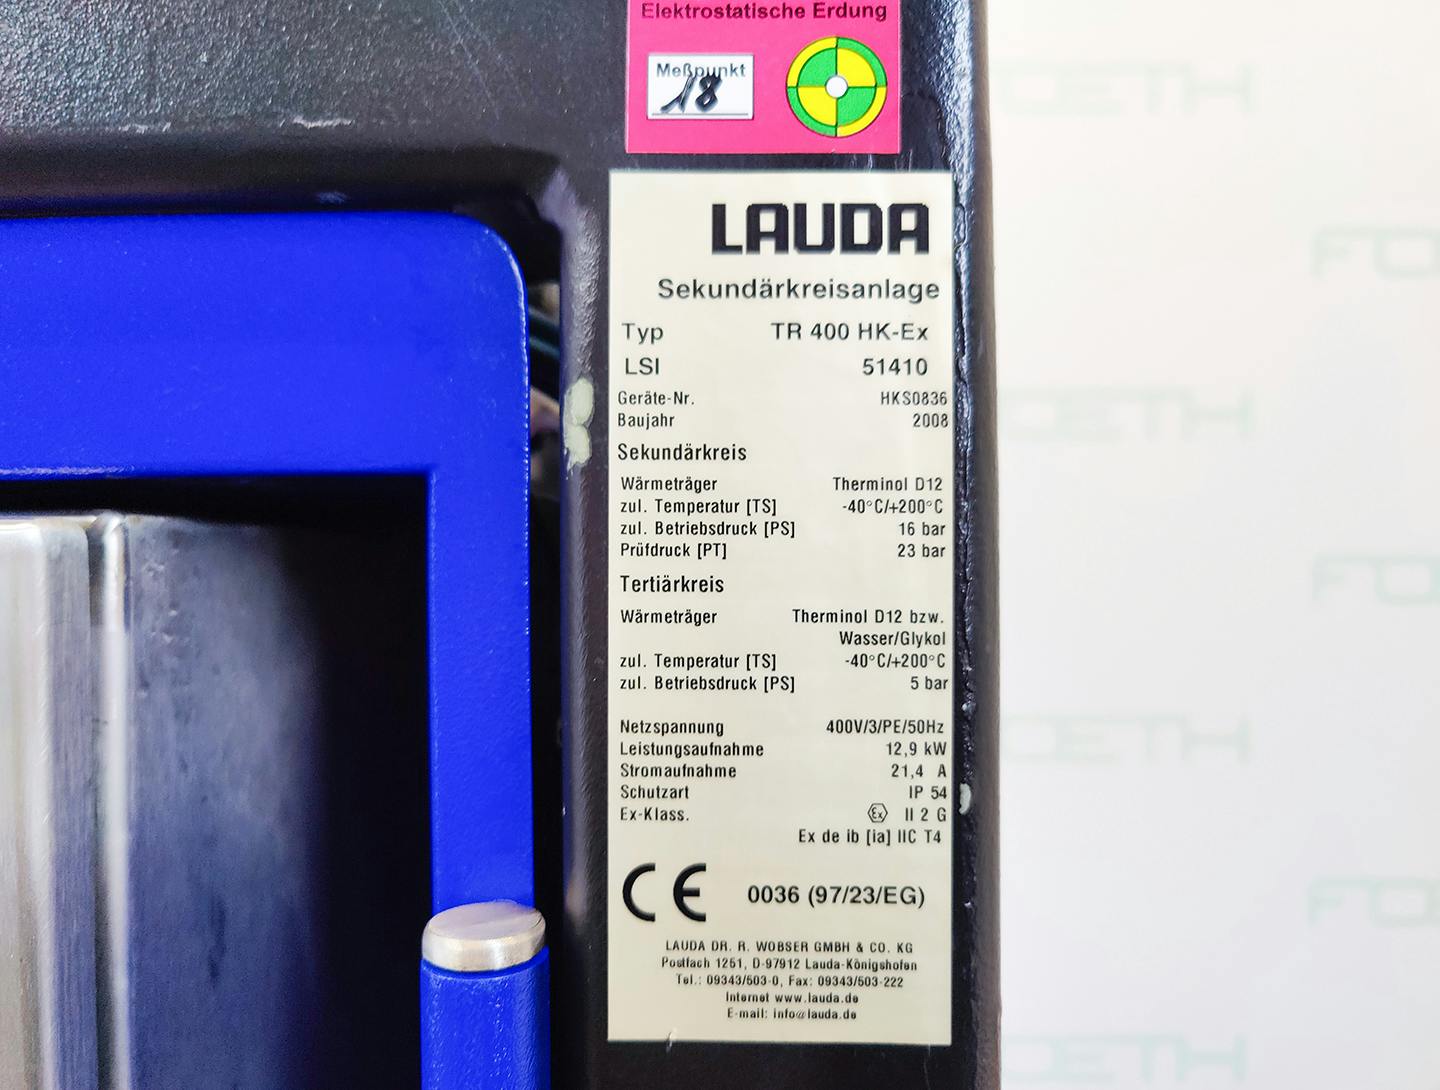 Lauda TR400 HK-EX "secondary circuit system" - Thermorégulateur - image 7